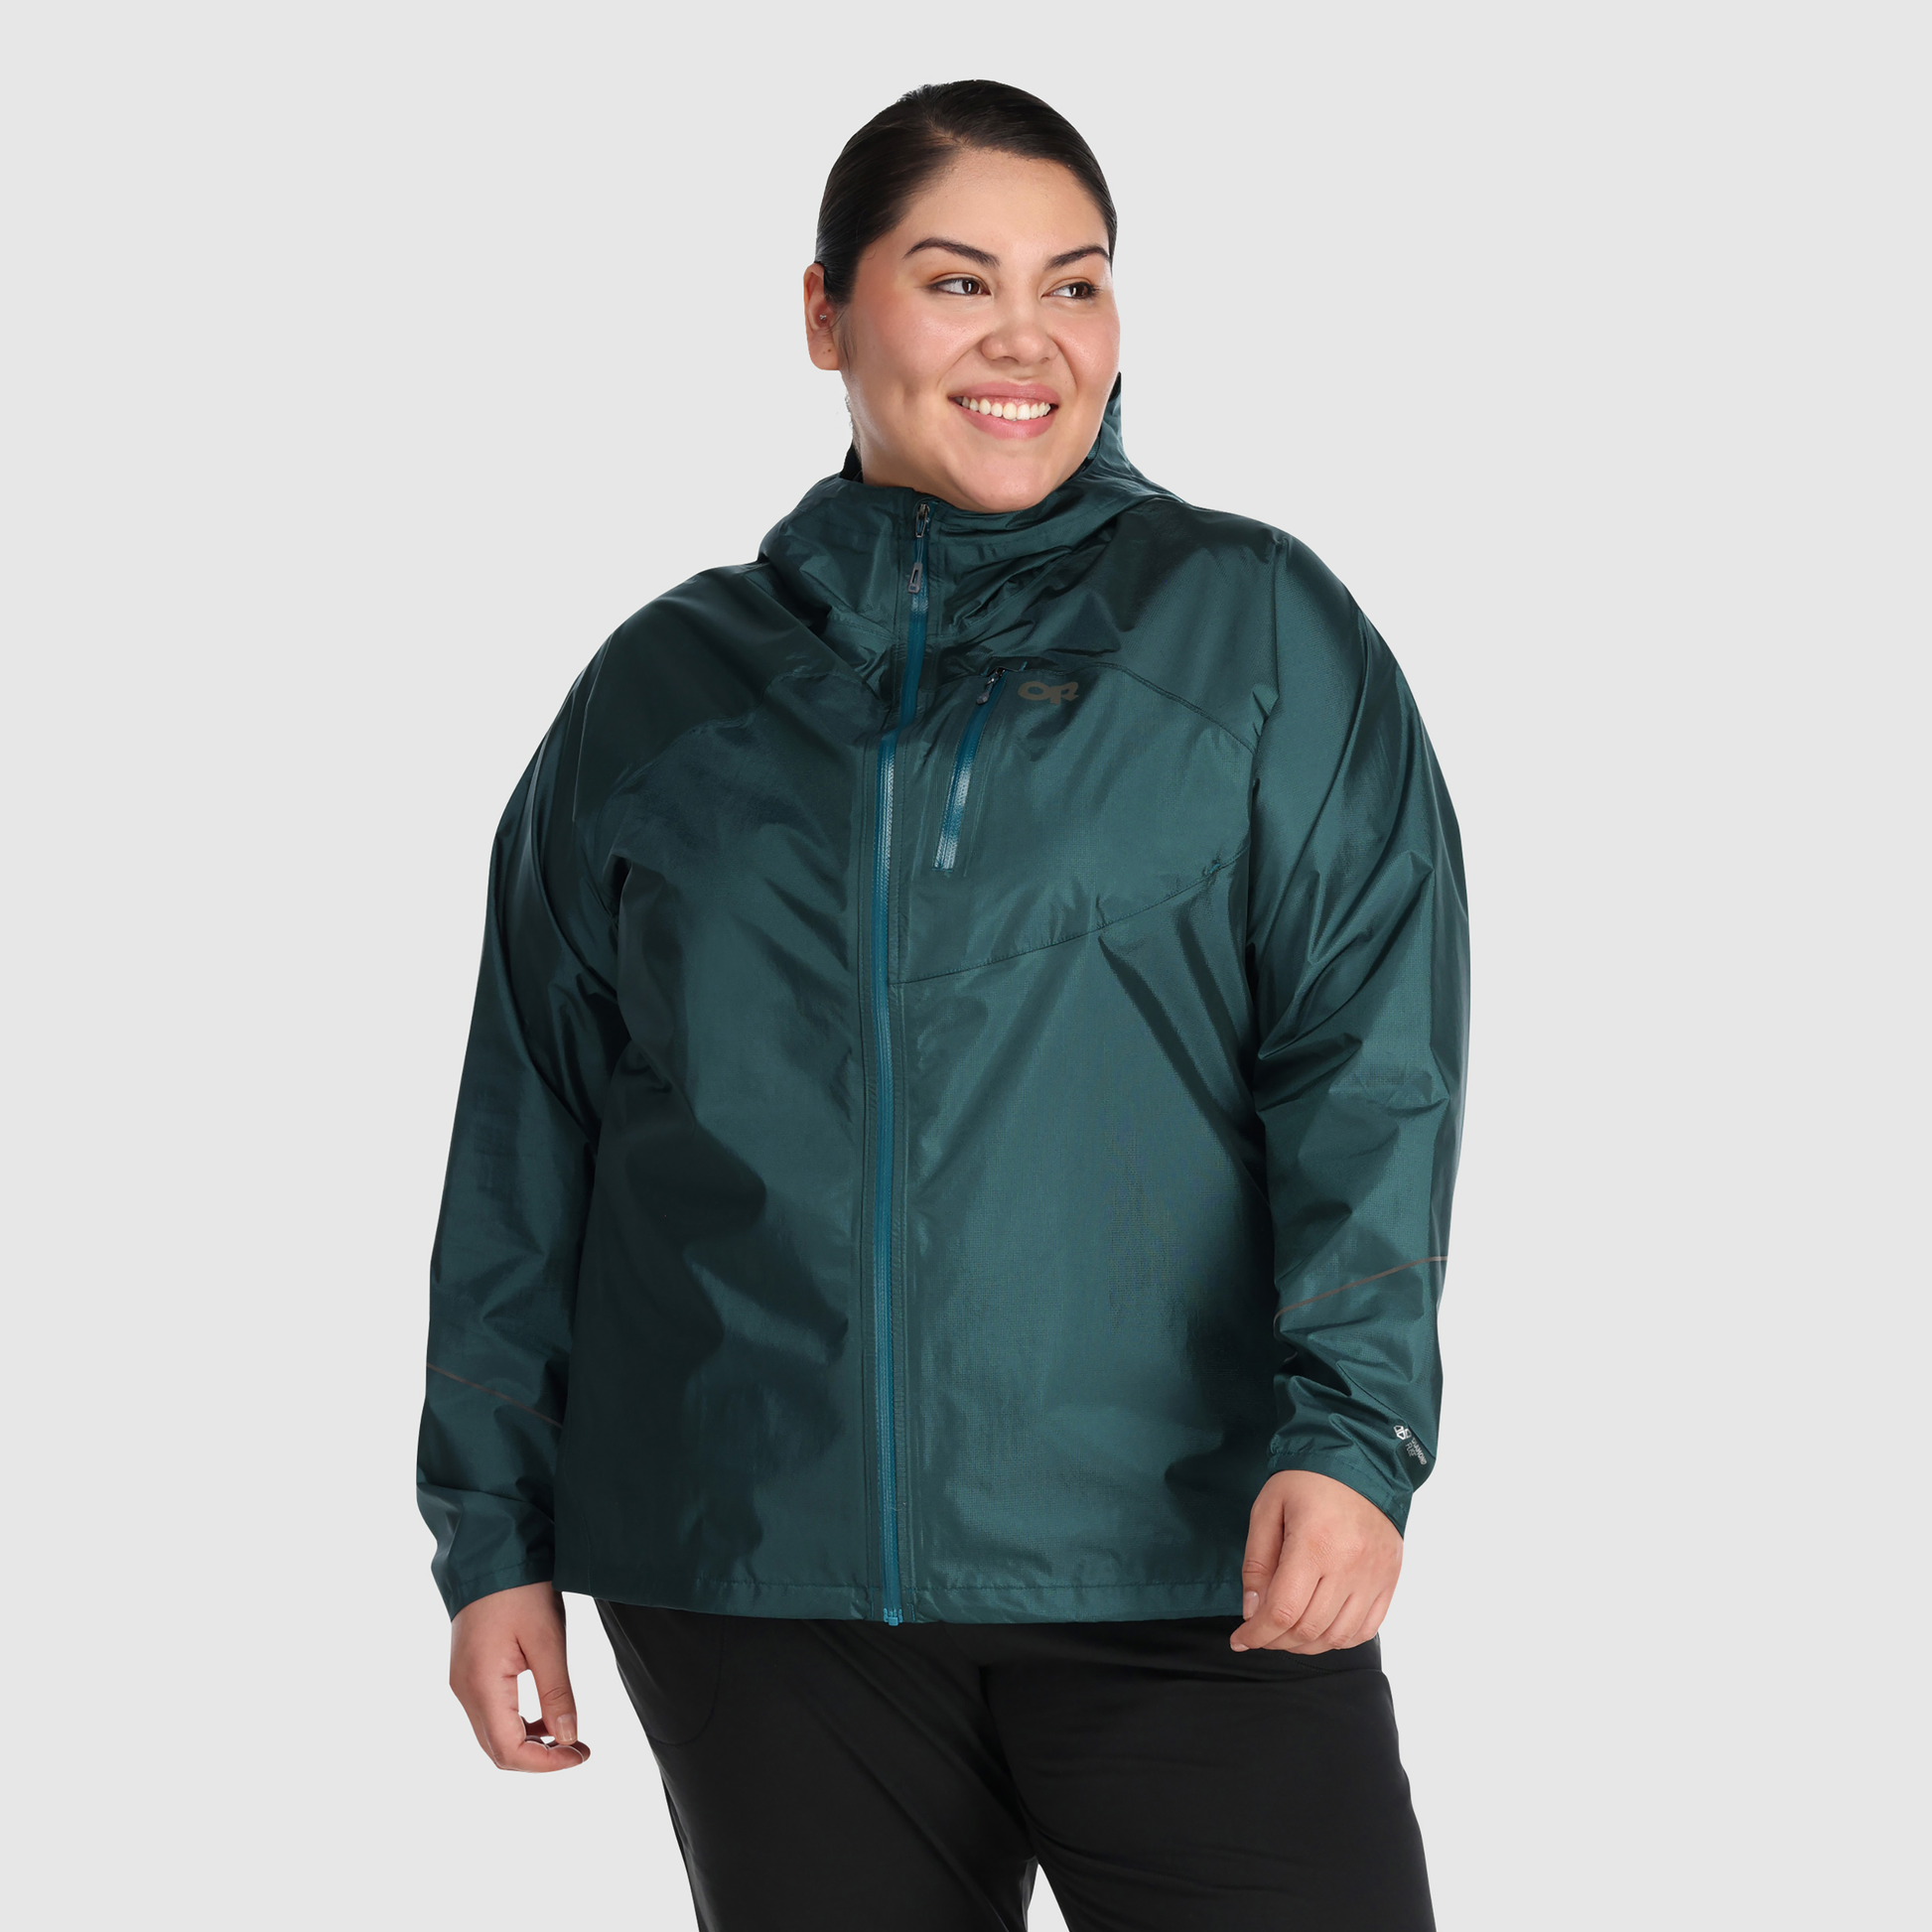 Rain Slicker/Rain Coat/Rain Pancho For Designer Handbags, Tote Bags And  Purses in large size and Transparent Black Color